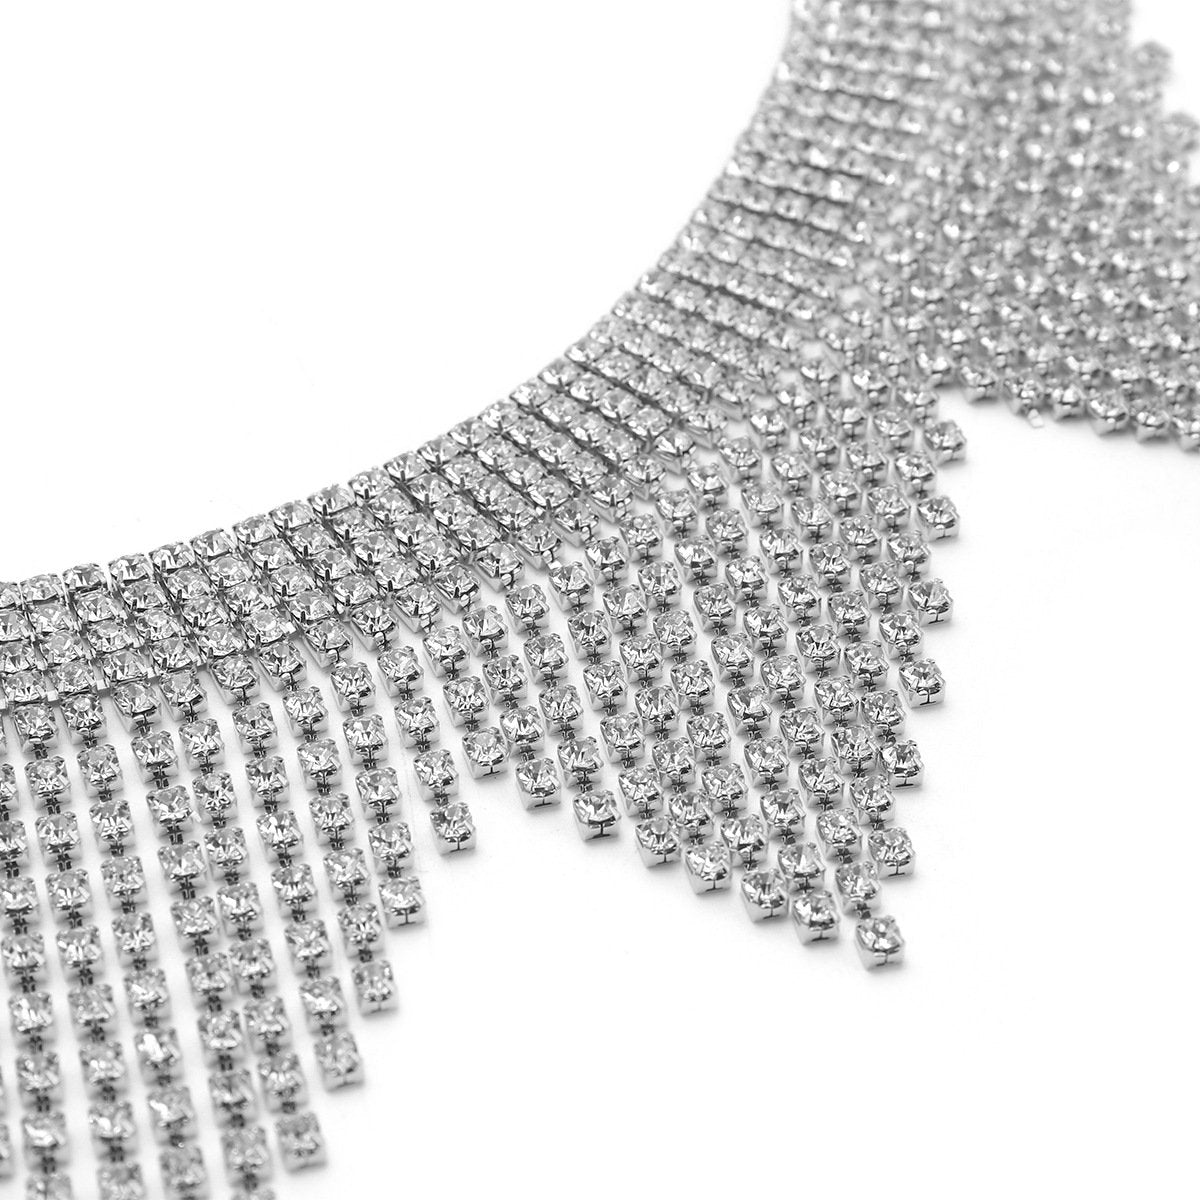 Crystal Rhinestone Jewelry Chain Belt